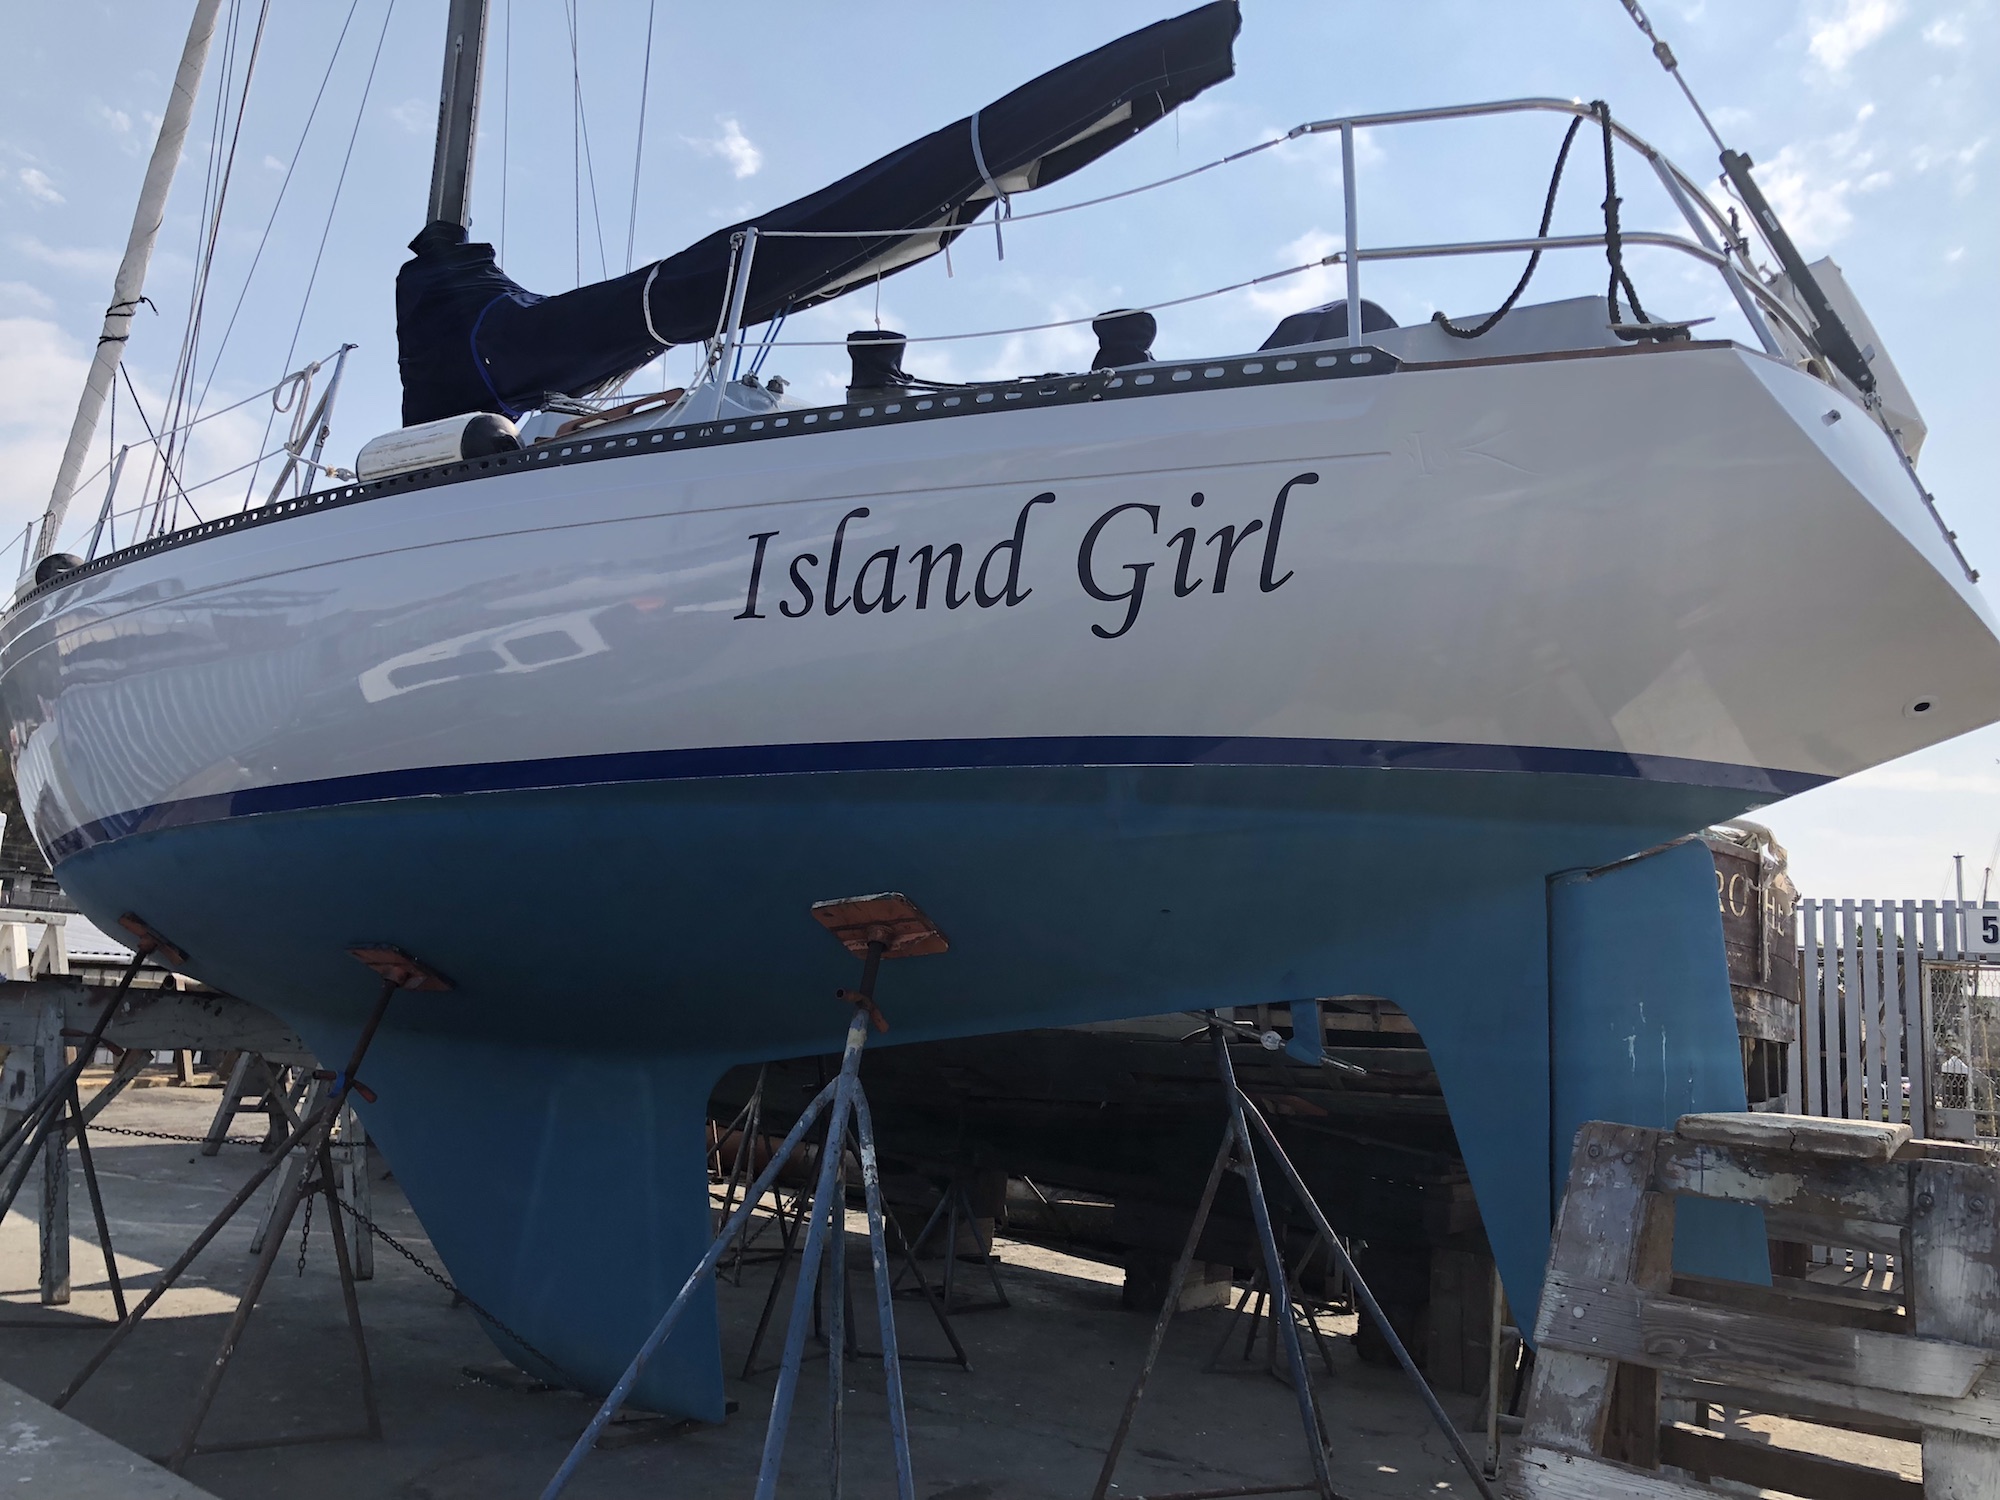 Island Girl hauled out